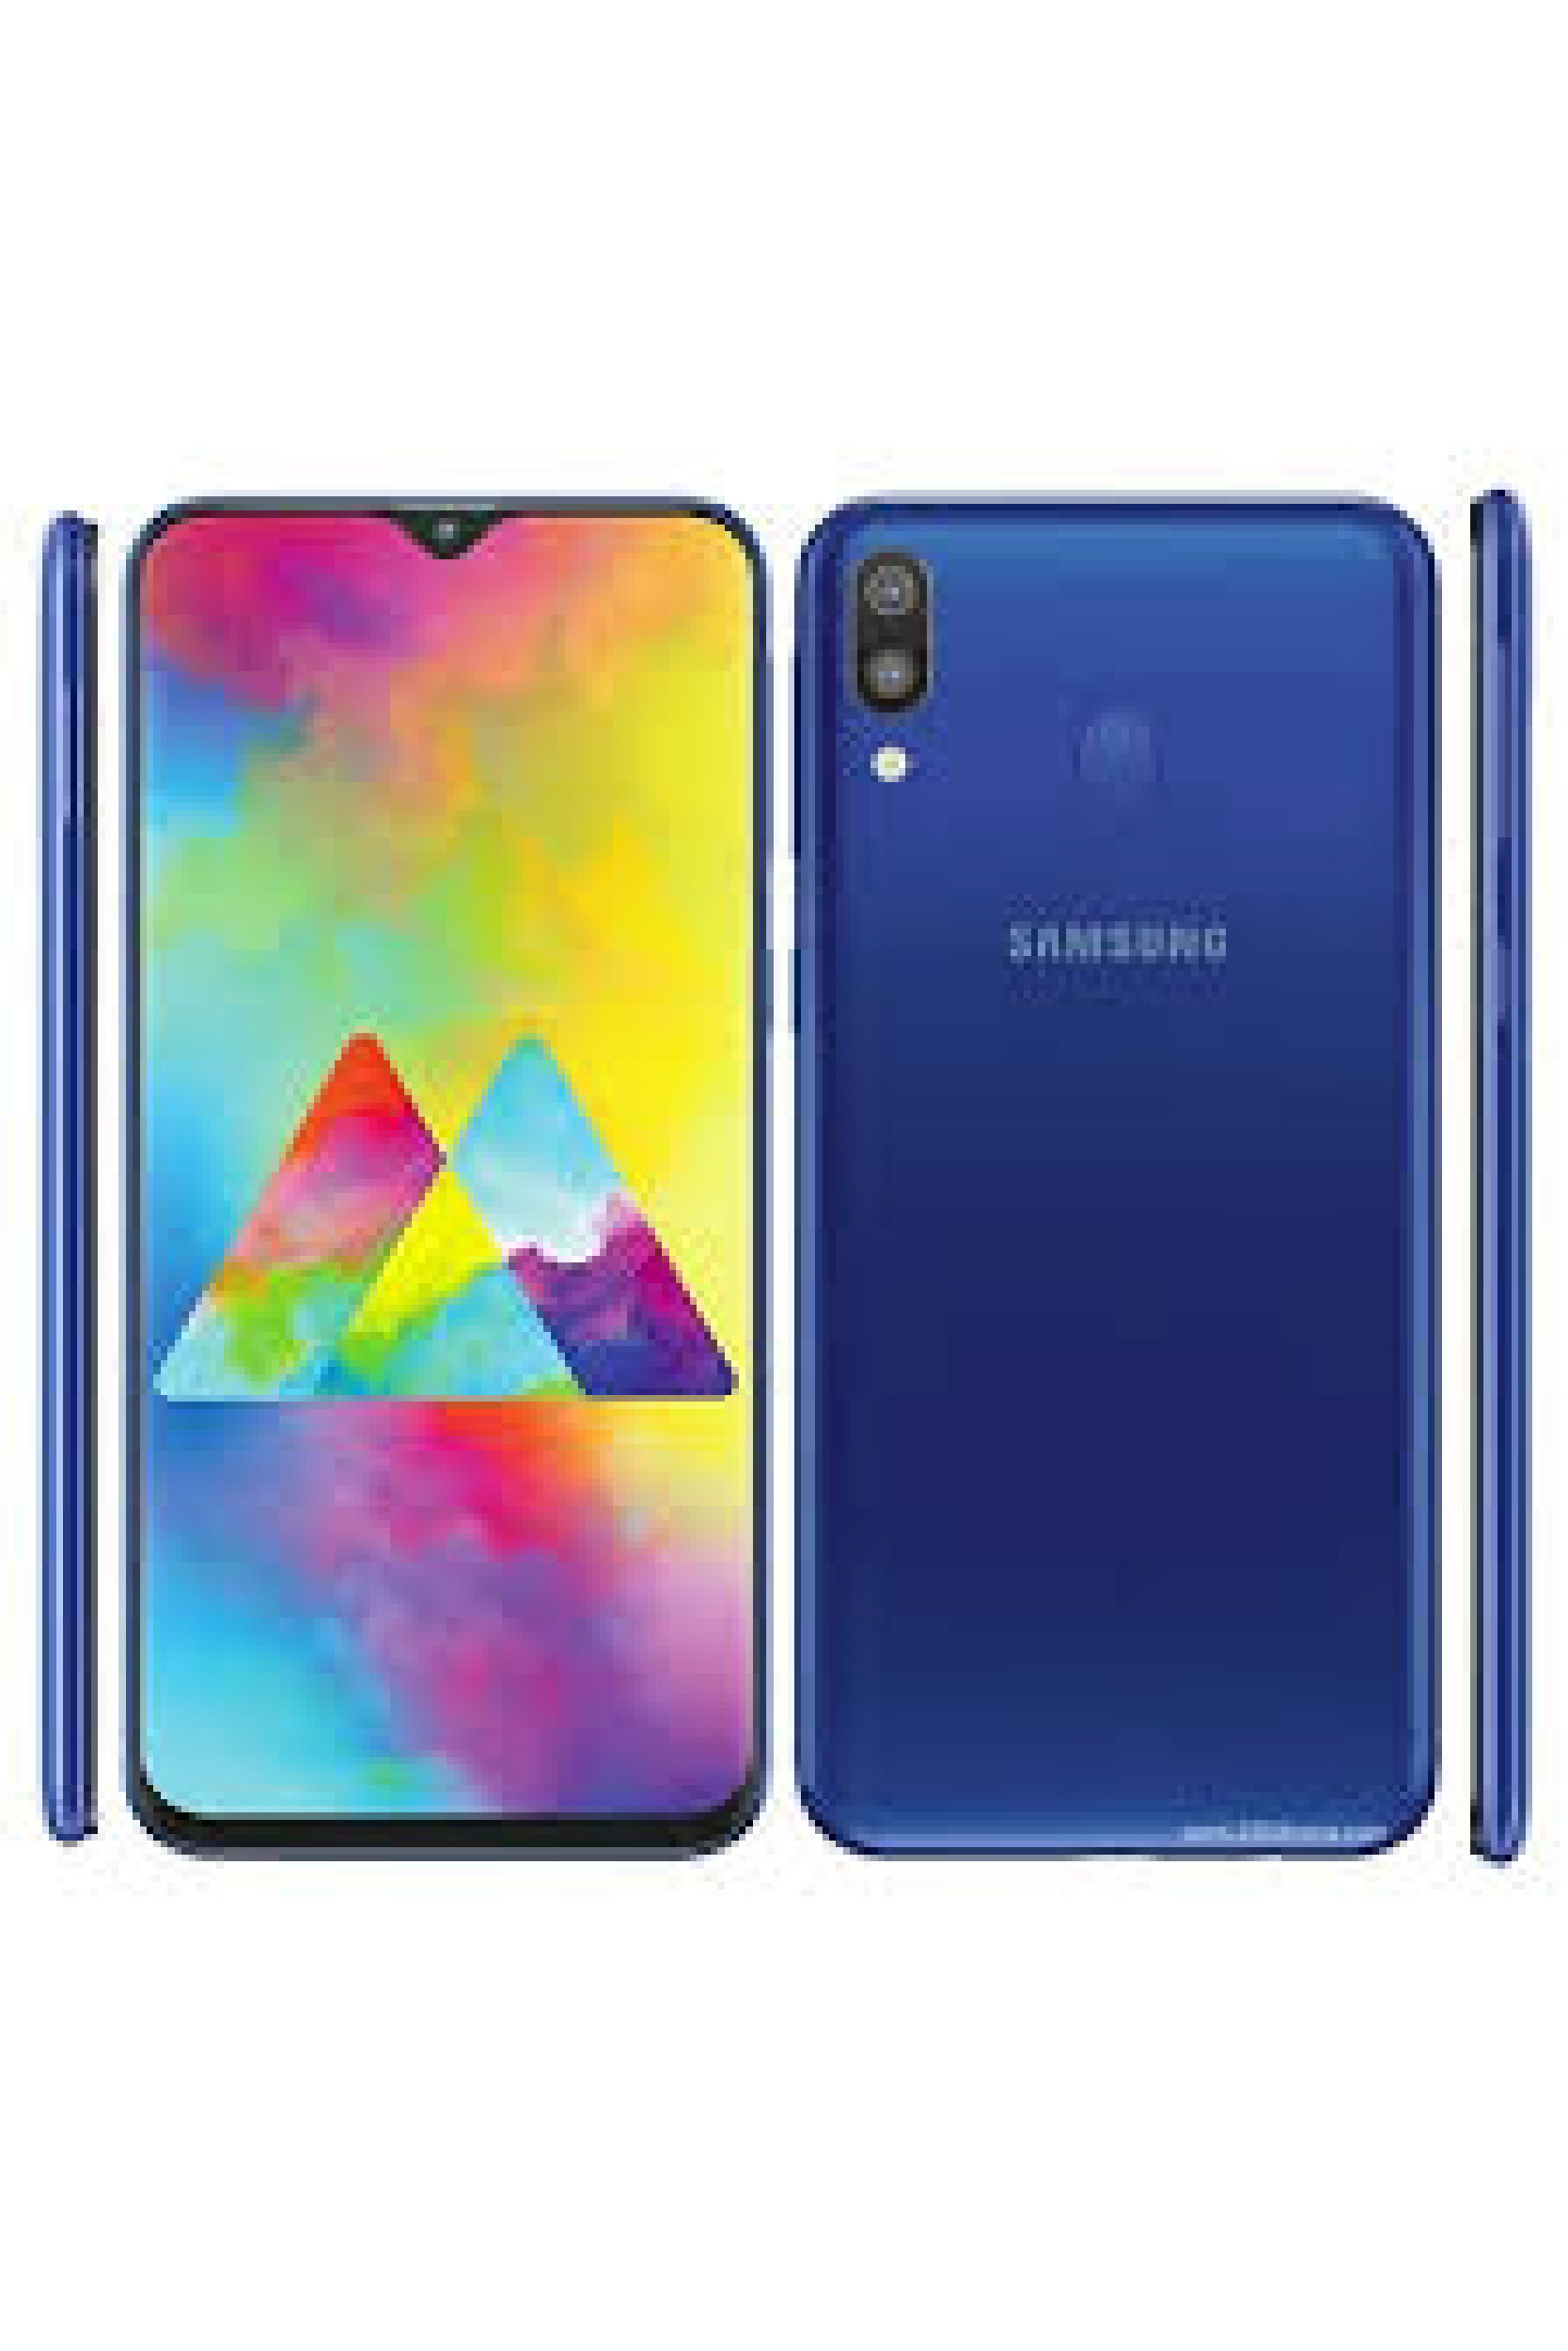 Samsung Galaxy M21 Price in Pakistan & Specs: Daily